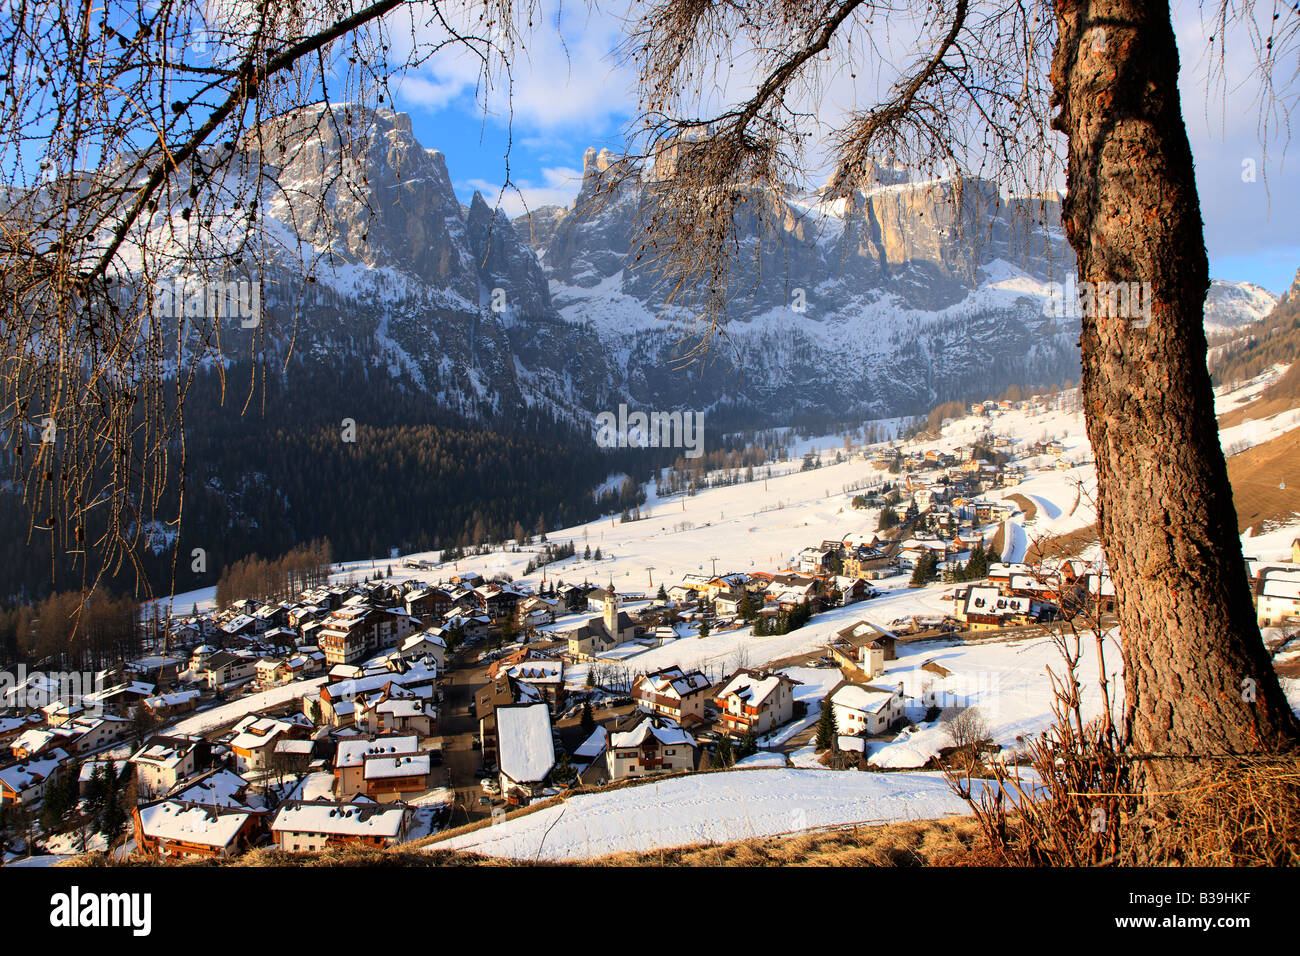 Early morning in the ski resort of Colfosco, Alta Badia Region, Italian Dolomites, Italy Stock Photo